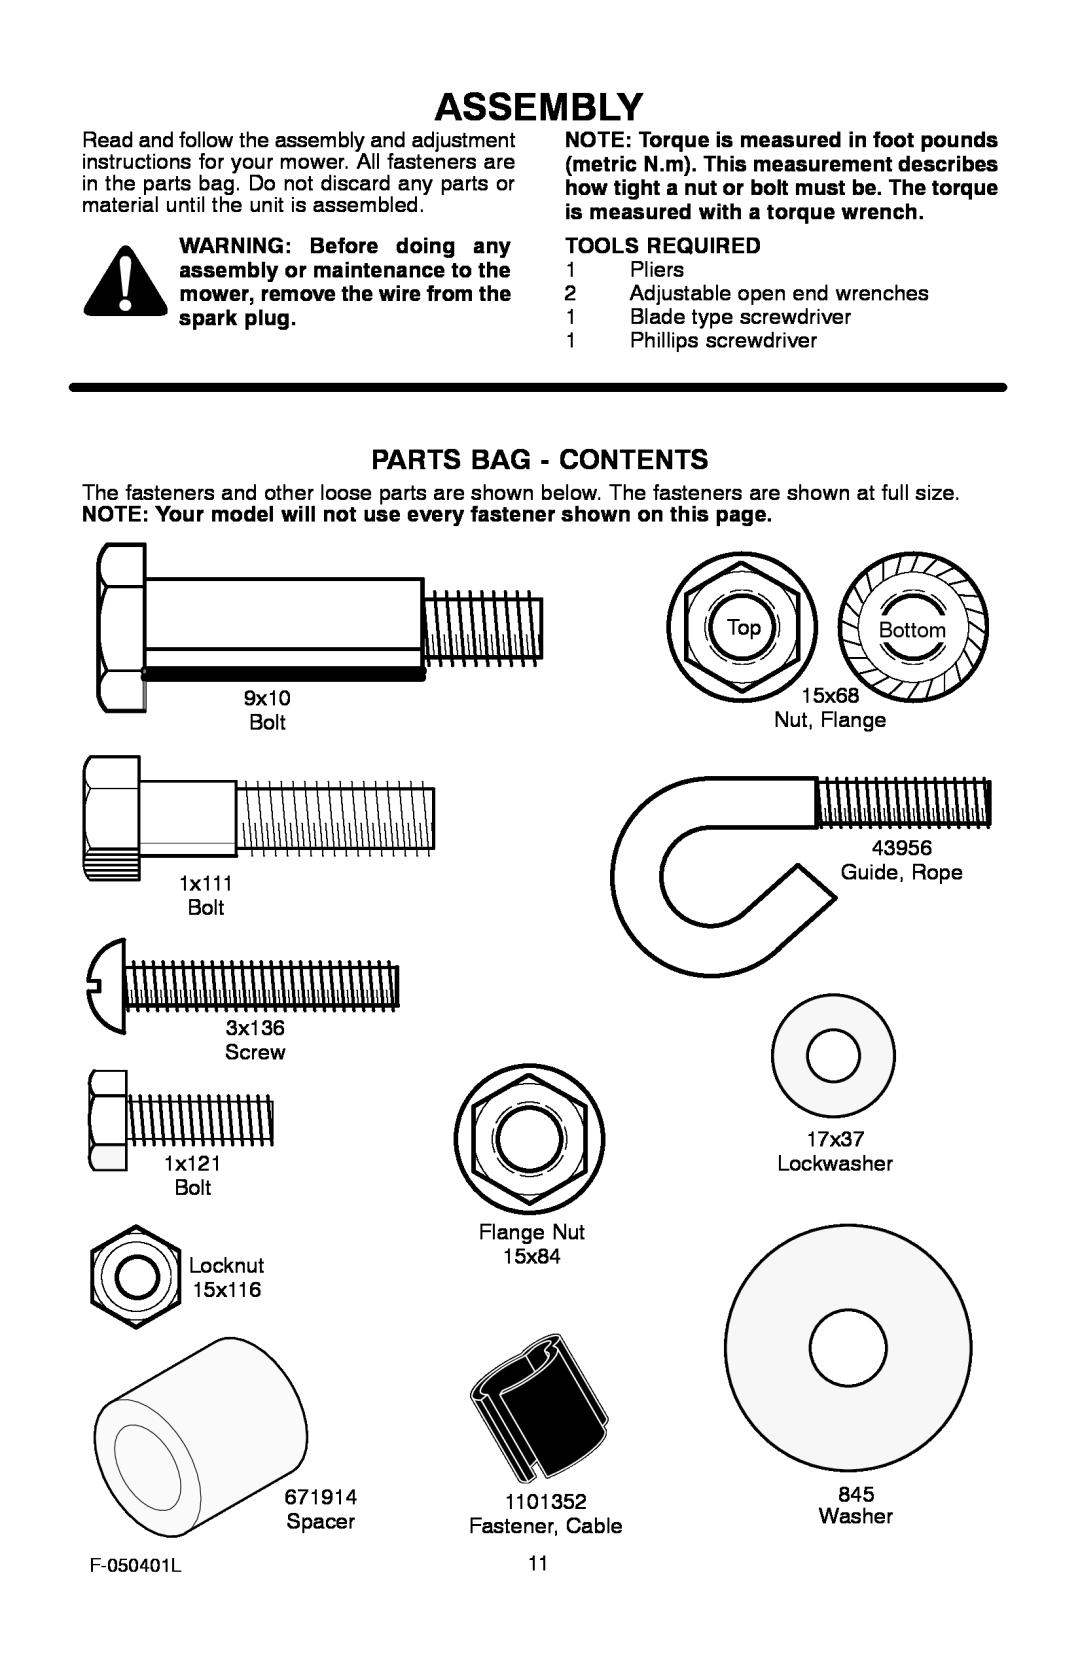 Murray 20-inch Push manual Assembly, Parts Bag - Contents 